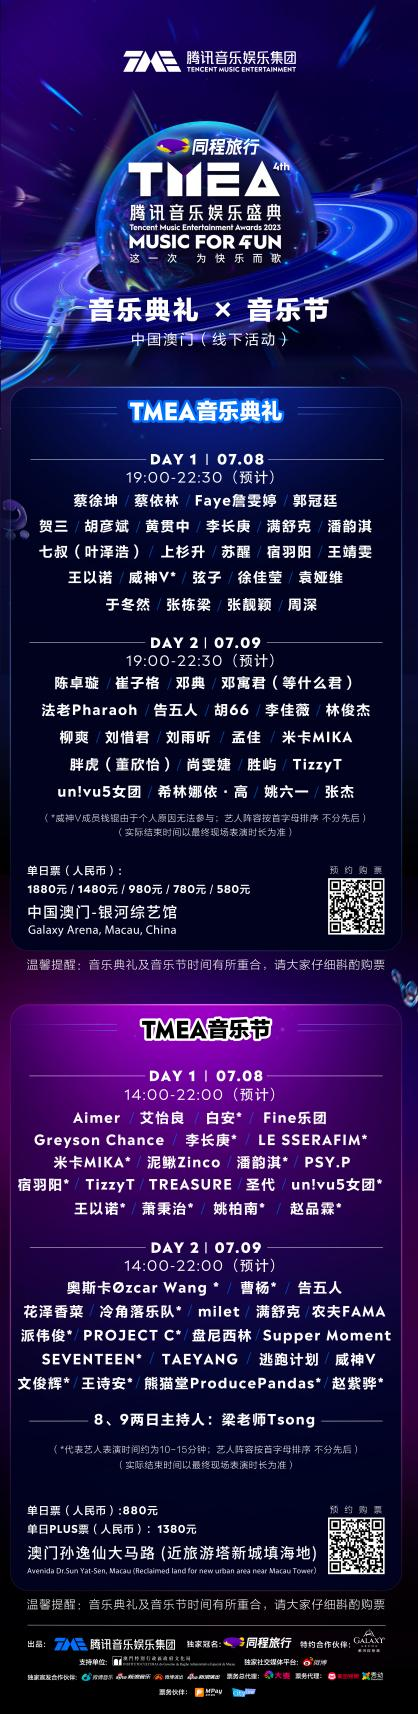 2023TMEA腾讯音乐娱乐盛典全阵容揭晓！林俊杰、刘雨昕、张杰给你超越期待的舞台